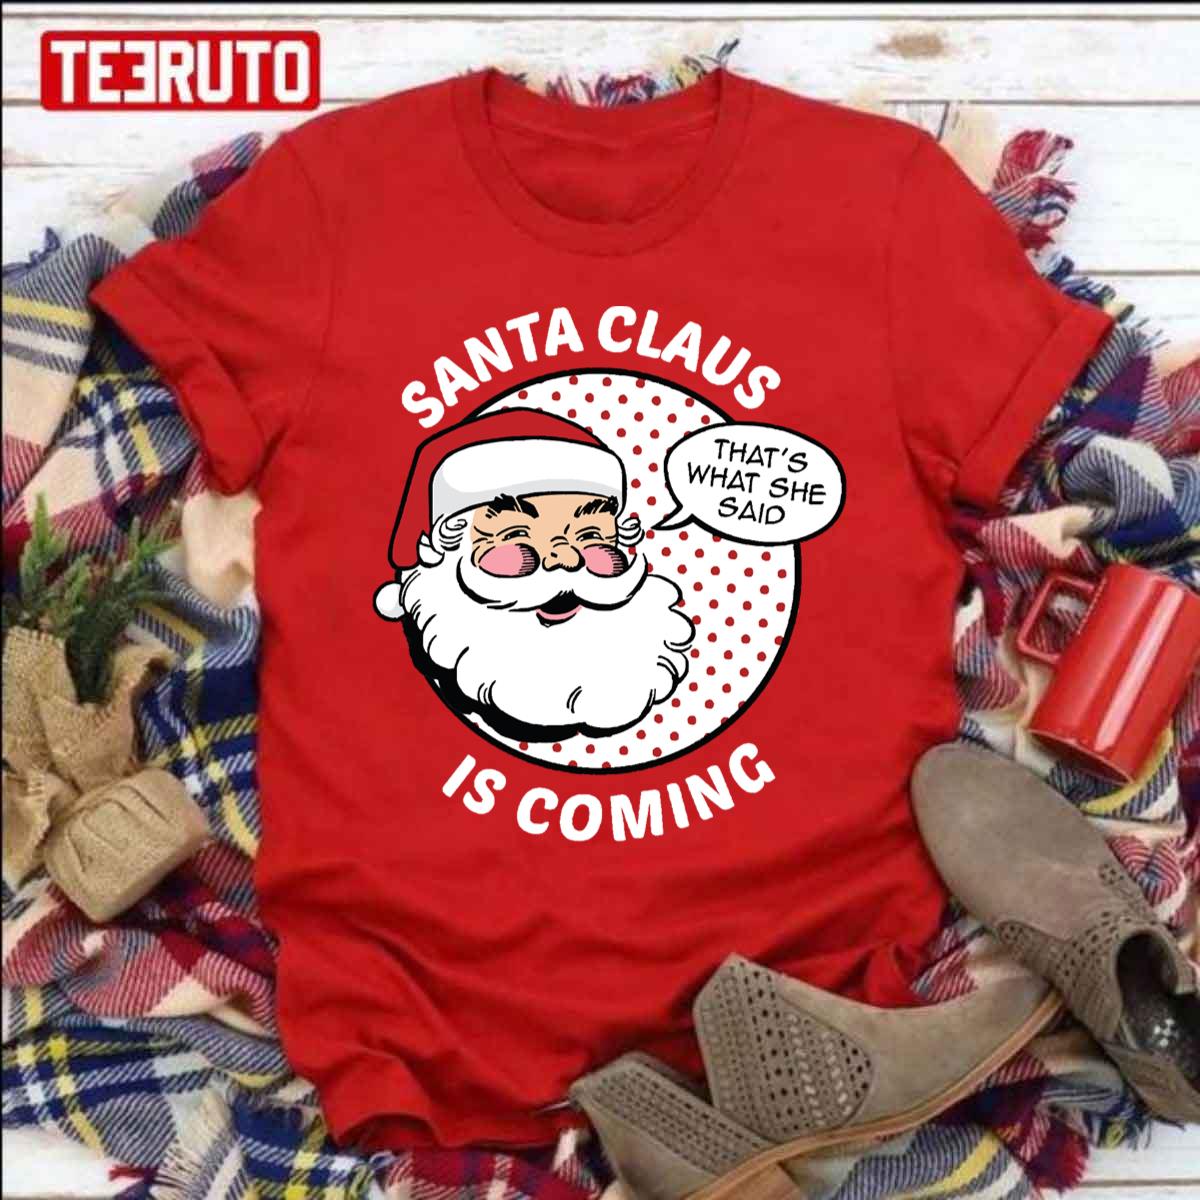 Santa Claus Is Coming That's What She Said Funny Adult Joke Xmas Unisex Sweatshirt